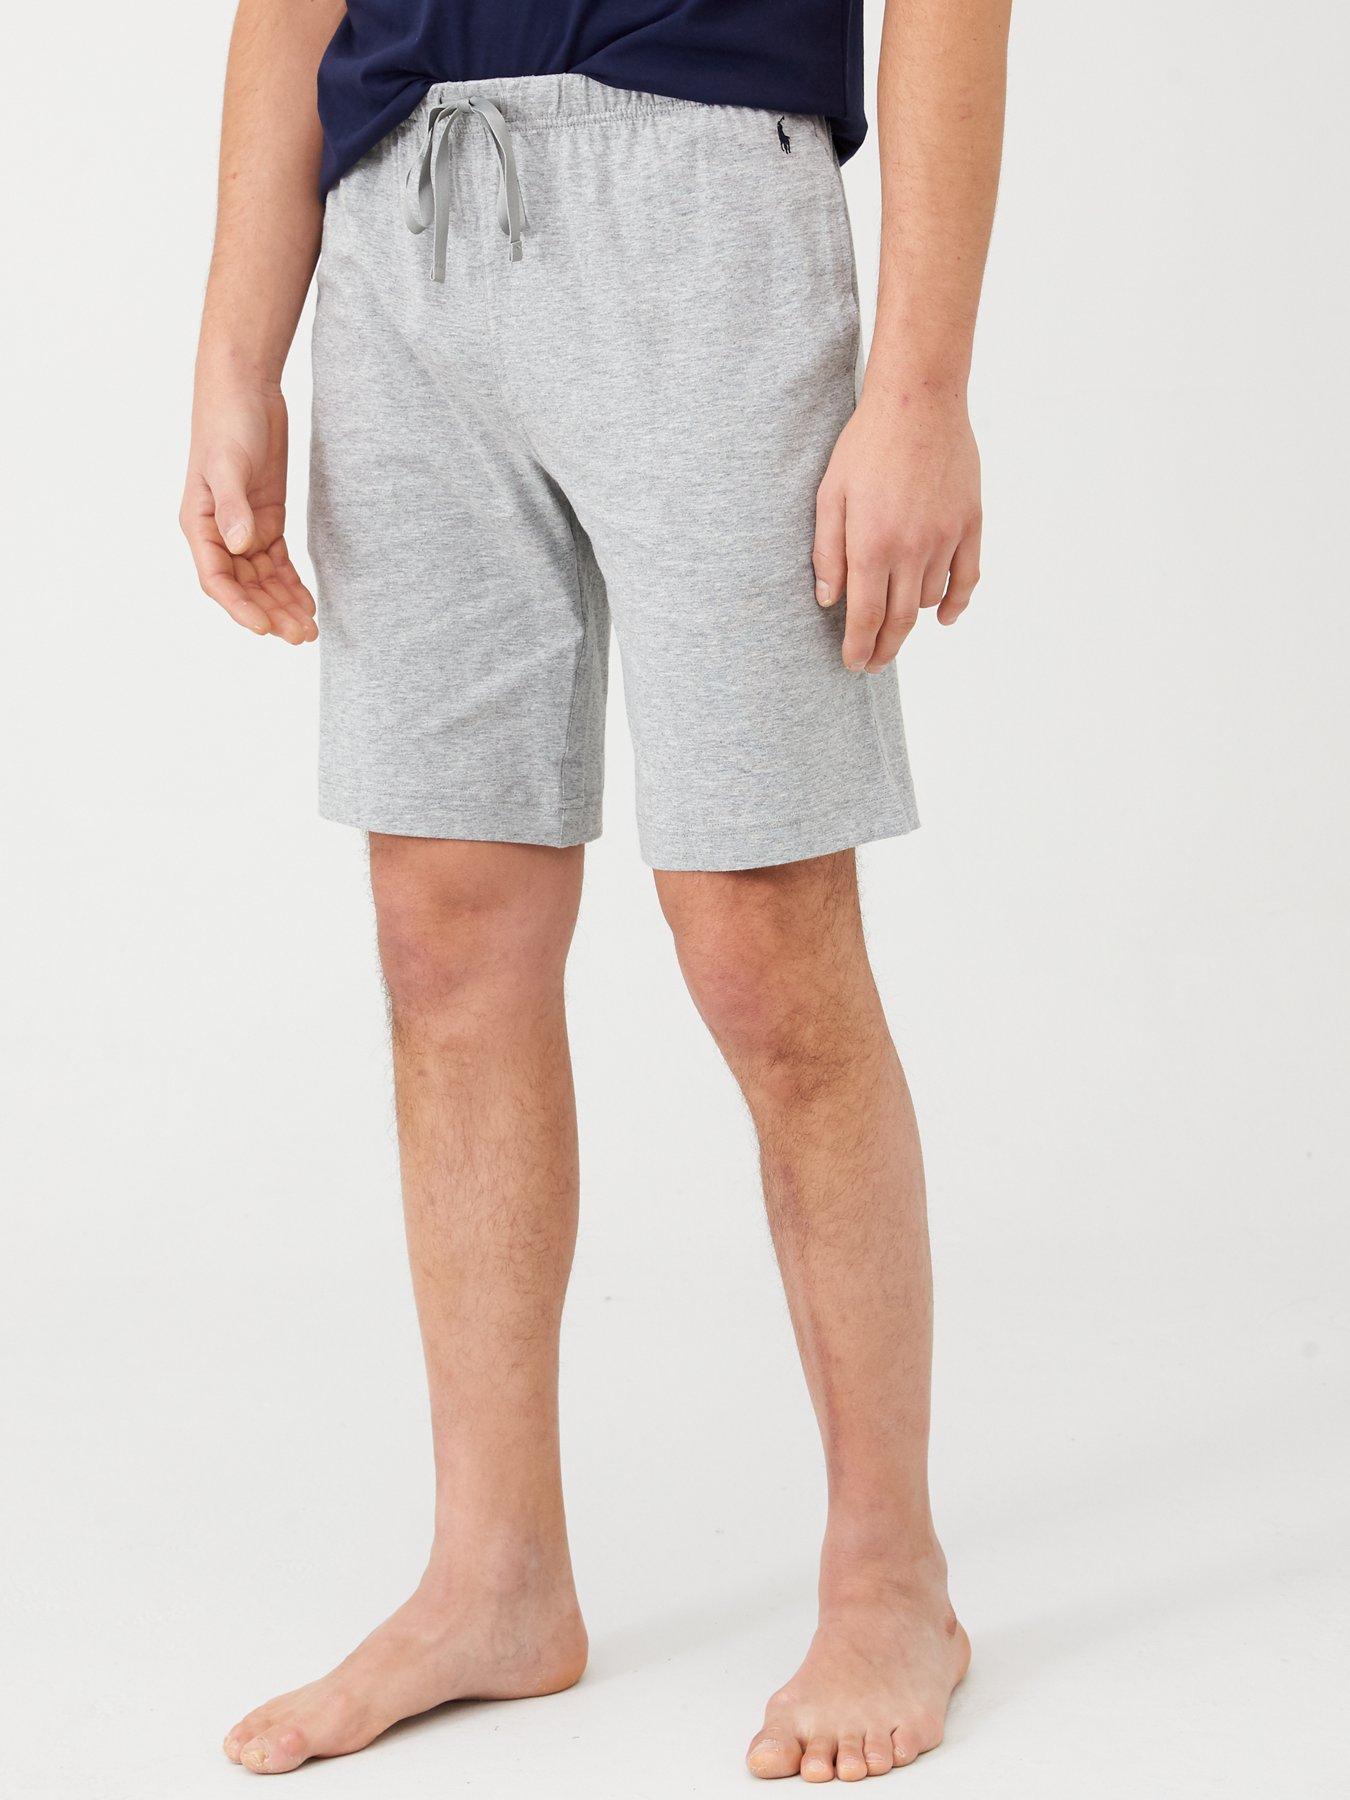 ralph lauren jogging shorts